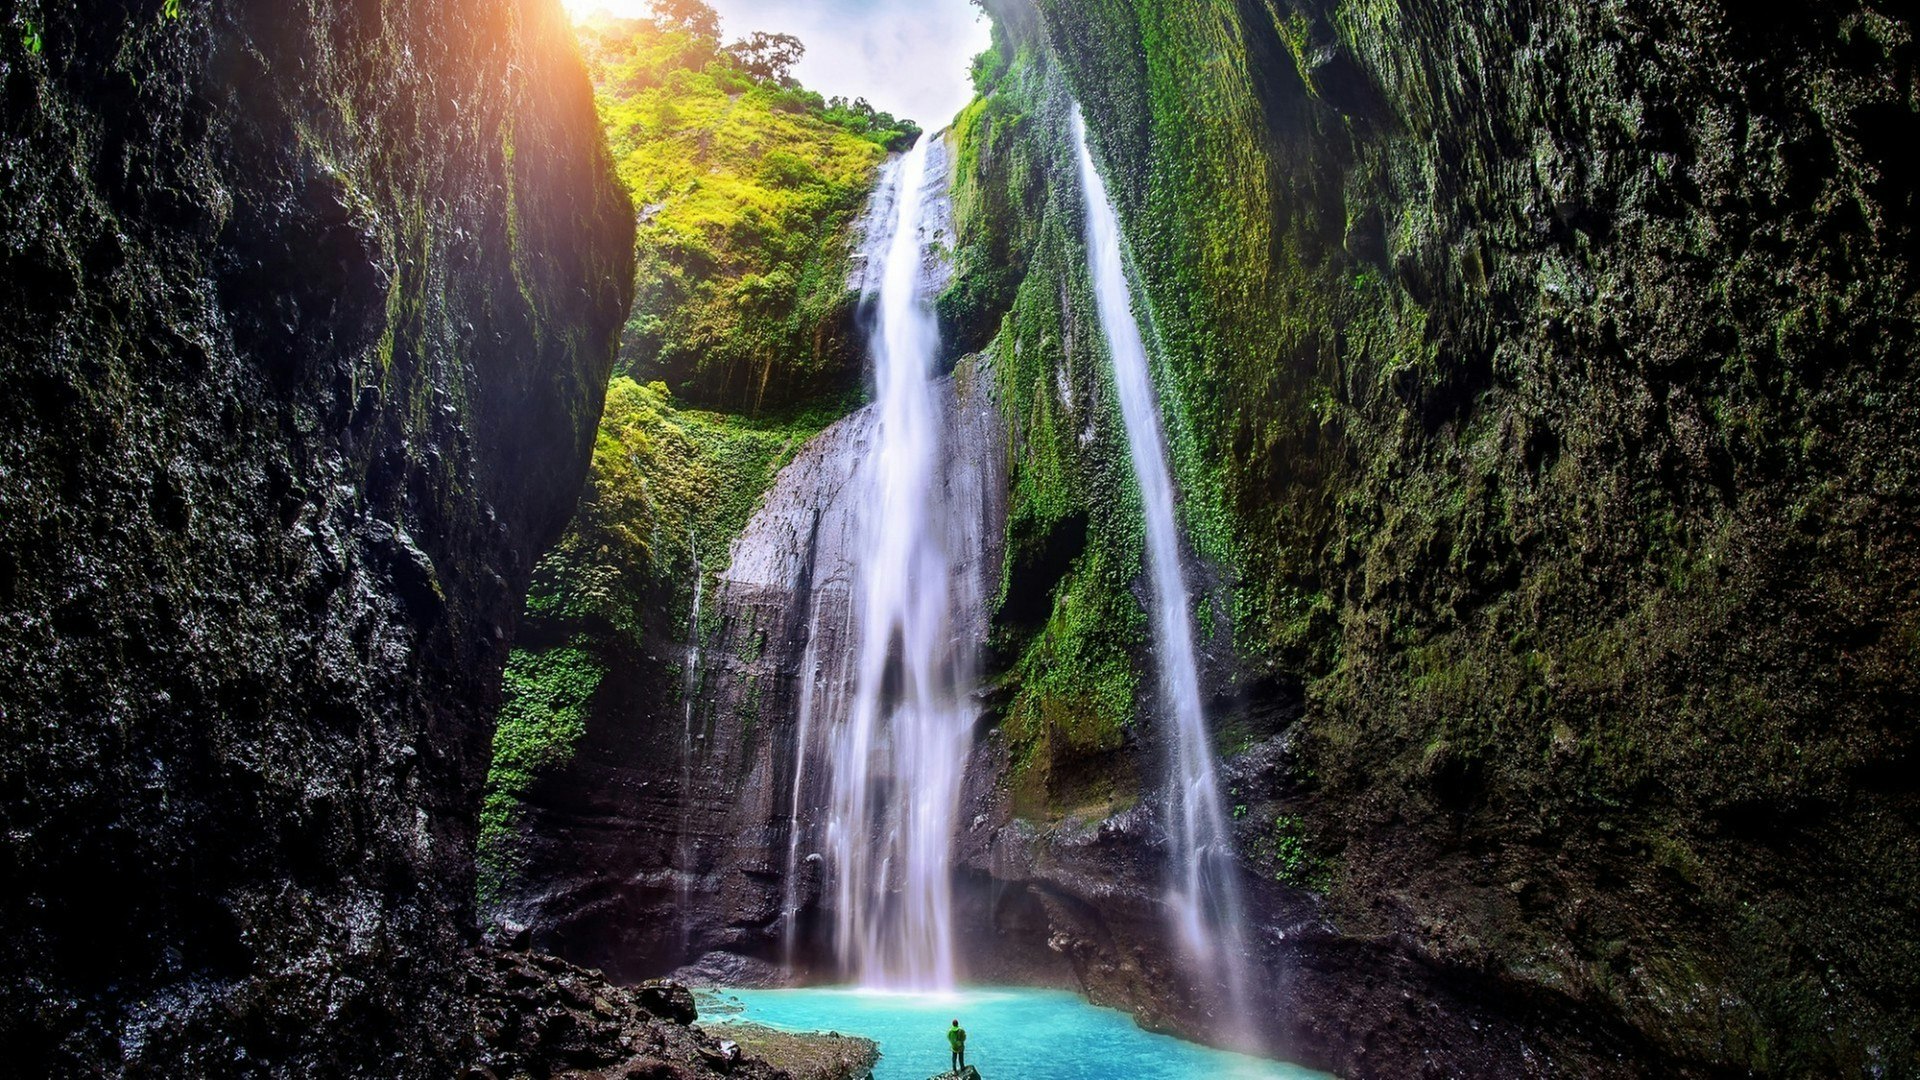 Madakaripura Waterfall is the tallest waterfall in Java and the second tallest waterfall in Indonesia.